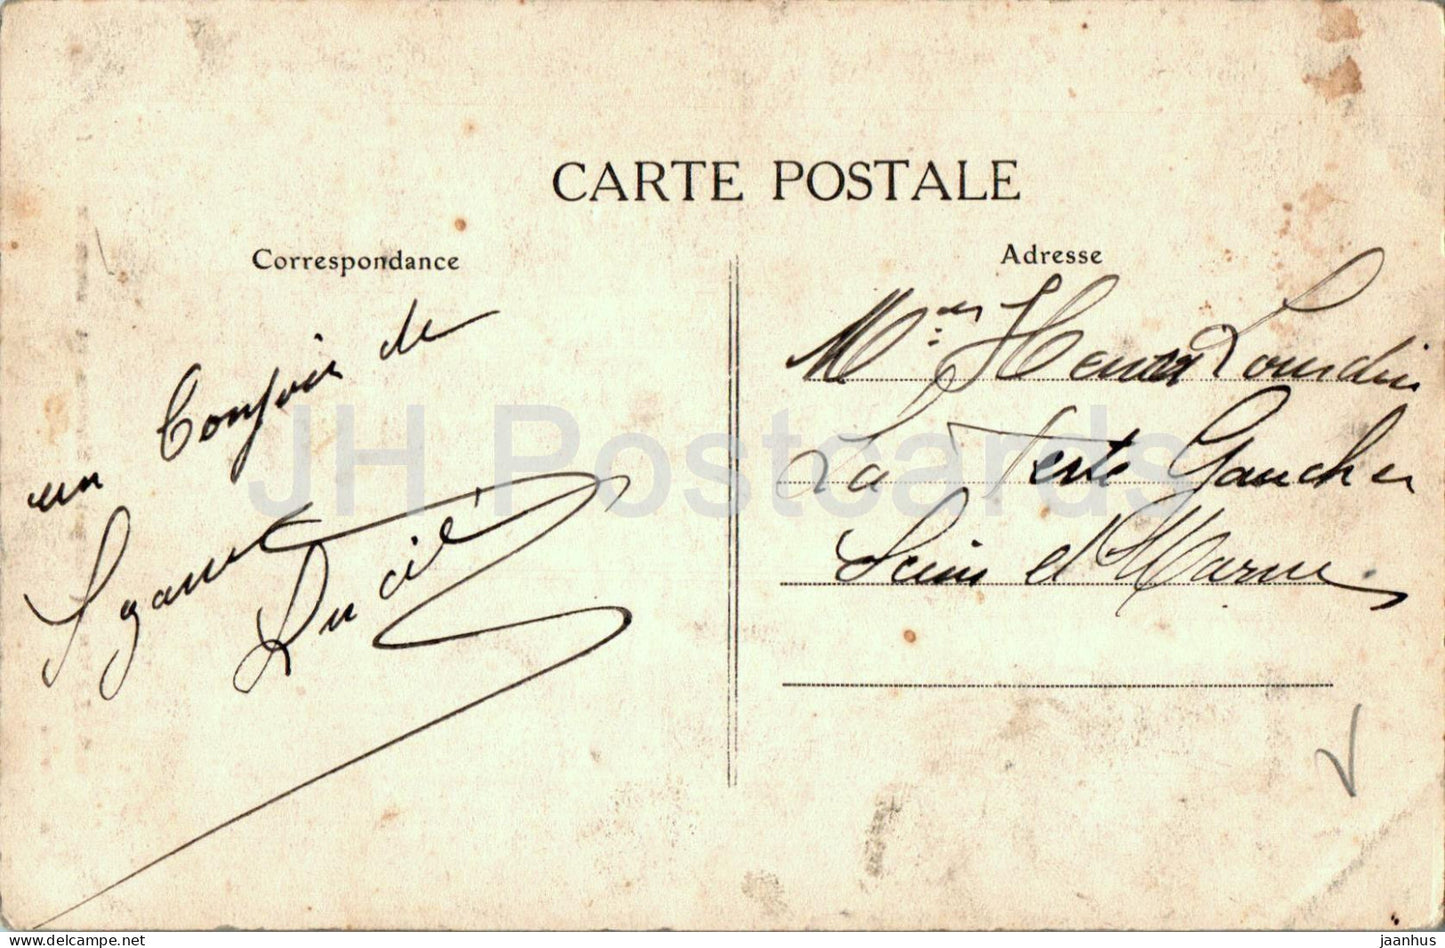 Sezanne - Monument Commemoratif - alte Postkarte - Frankreich - gebraucht 